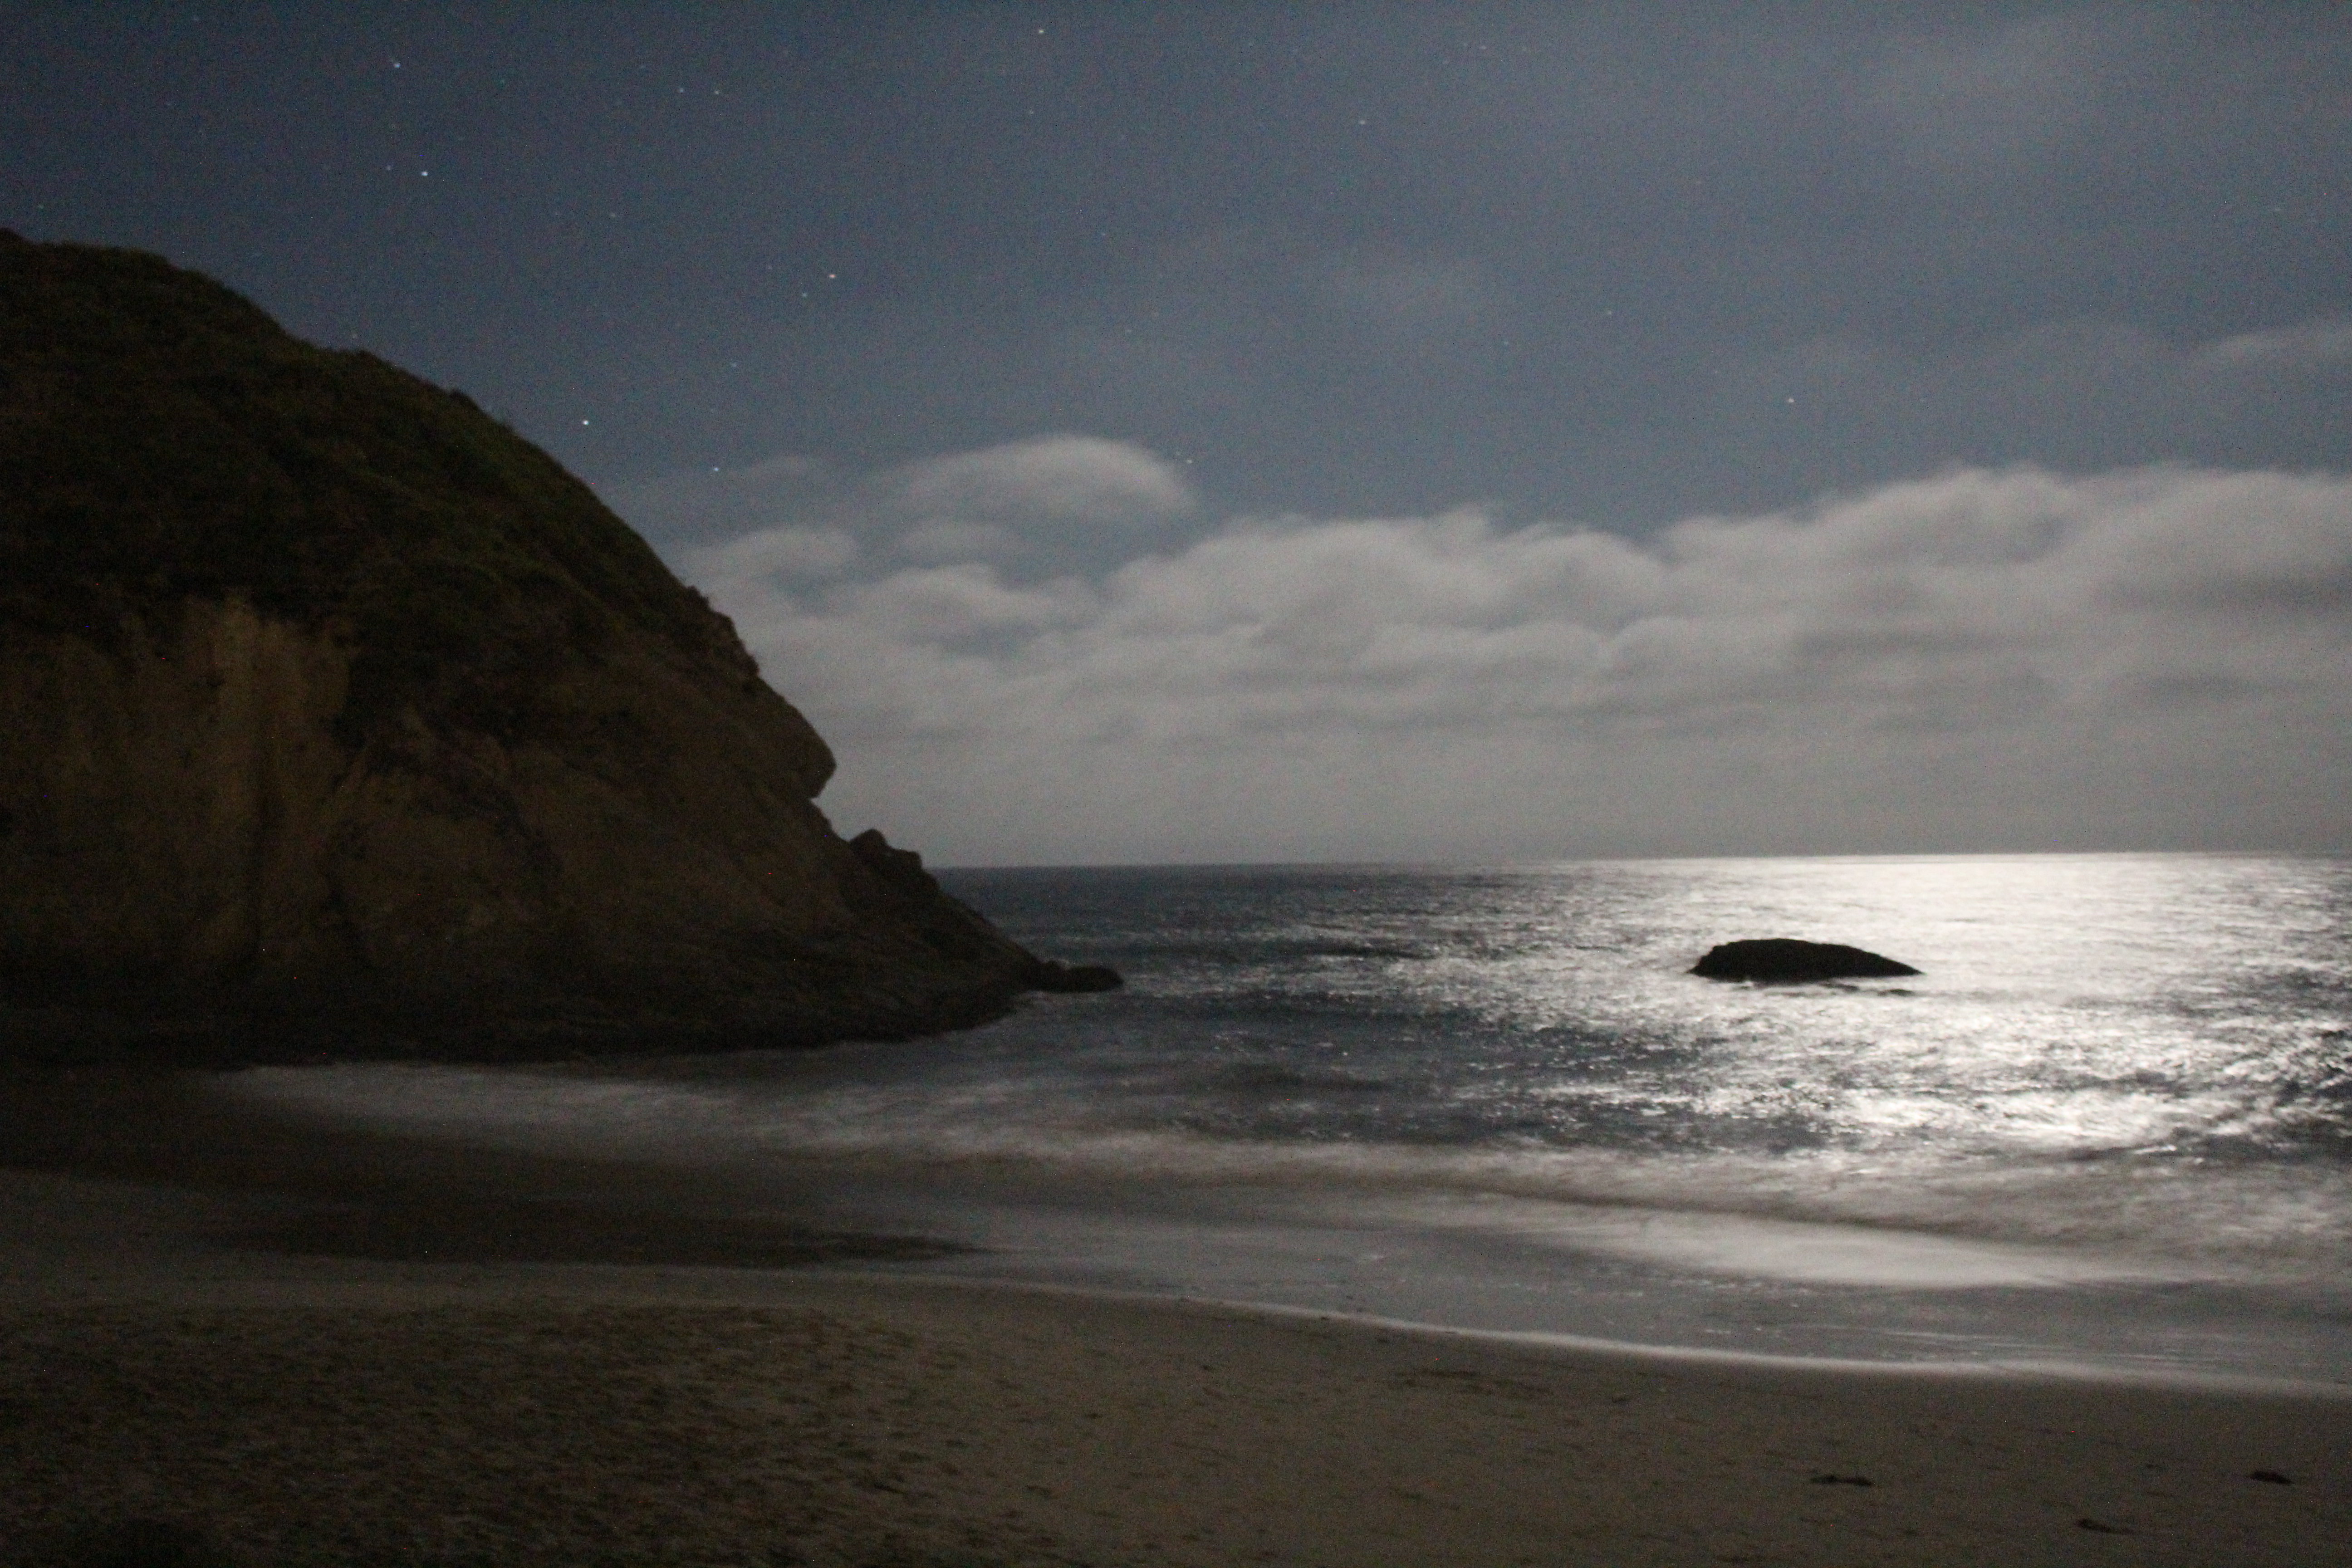 Night Shot of Waves Crashing, Dana Point, California